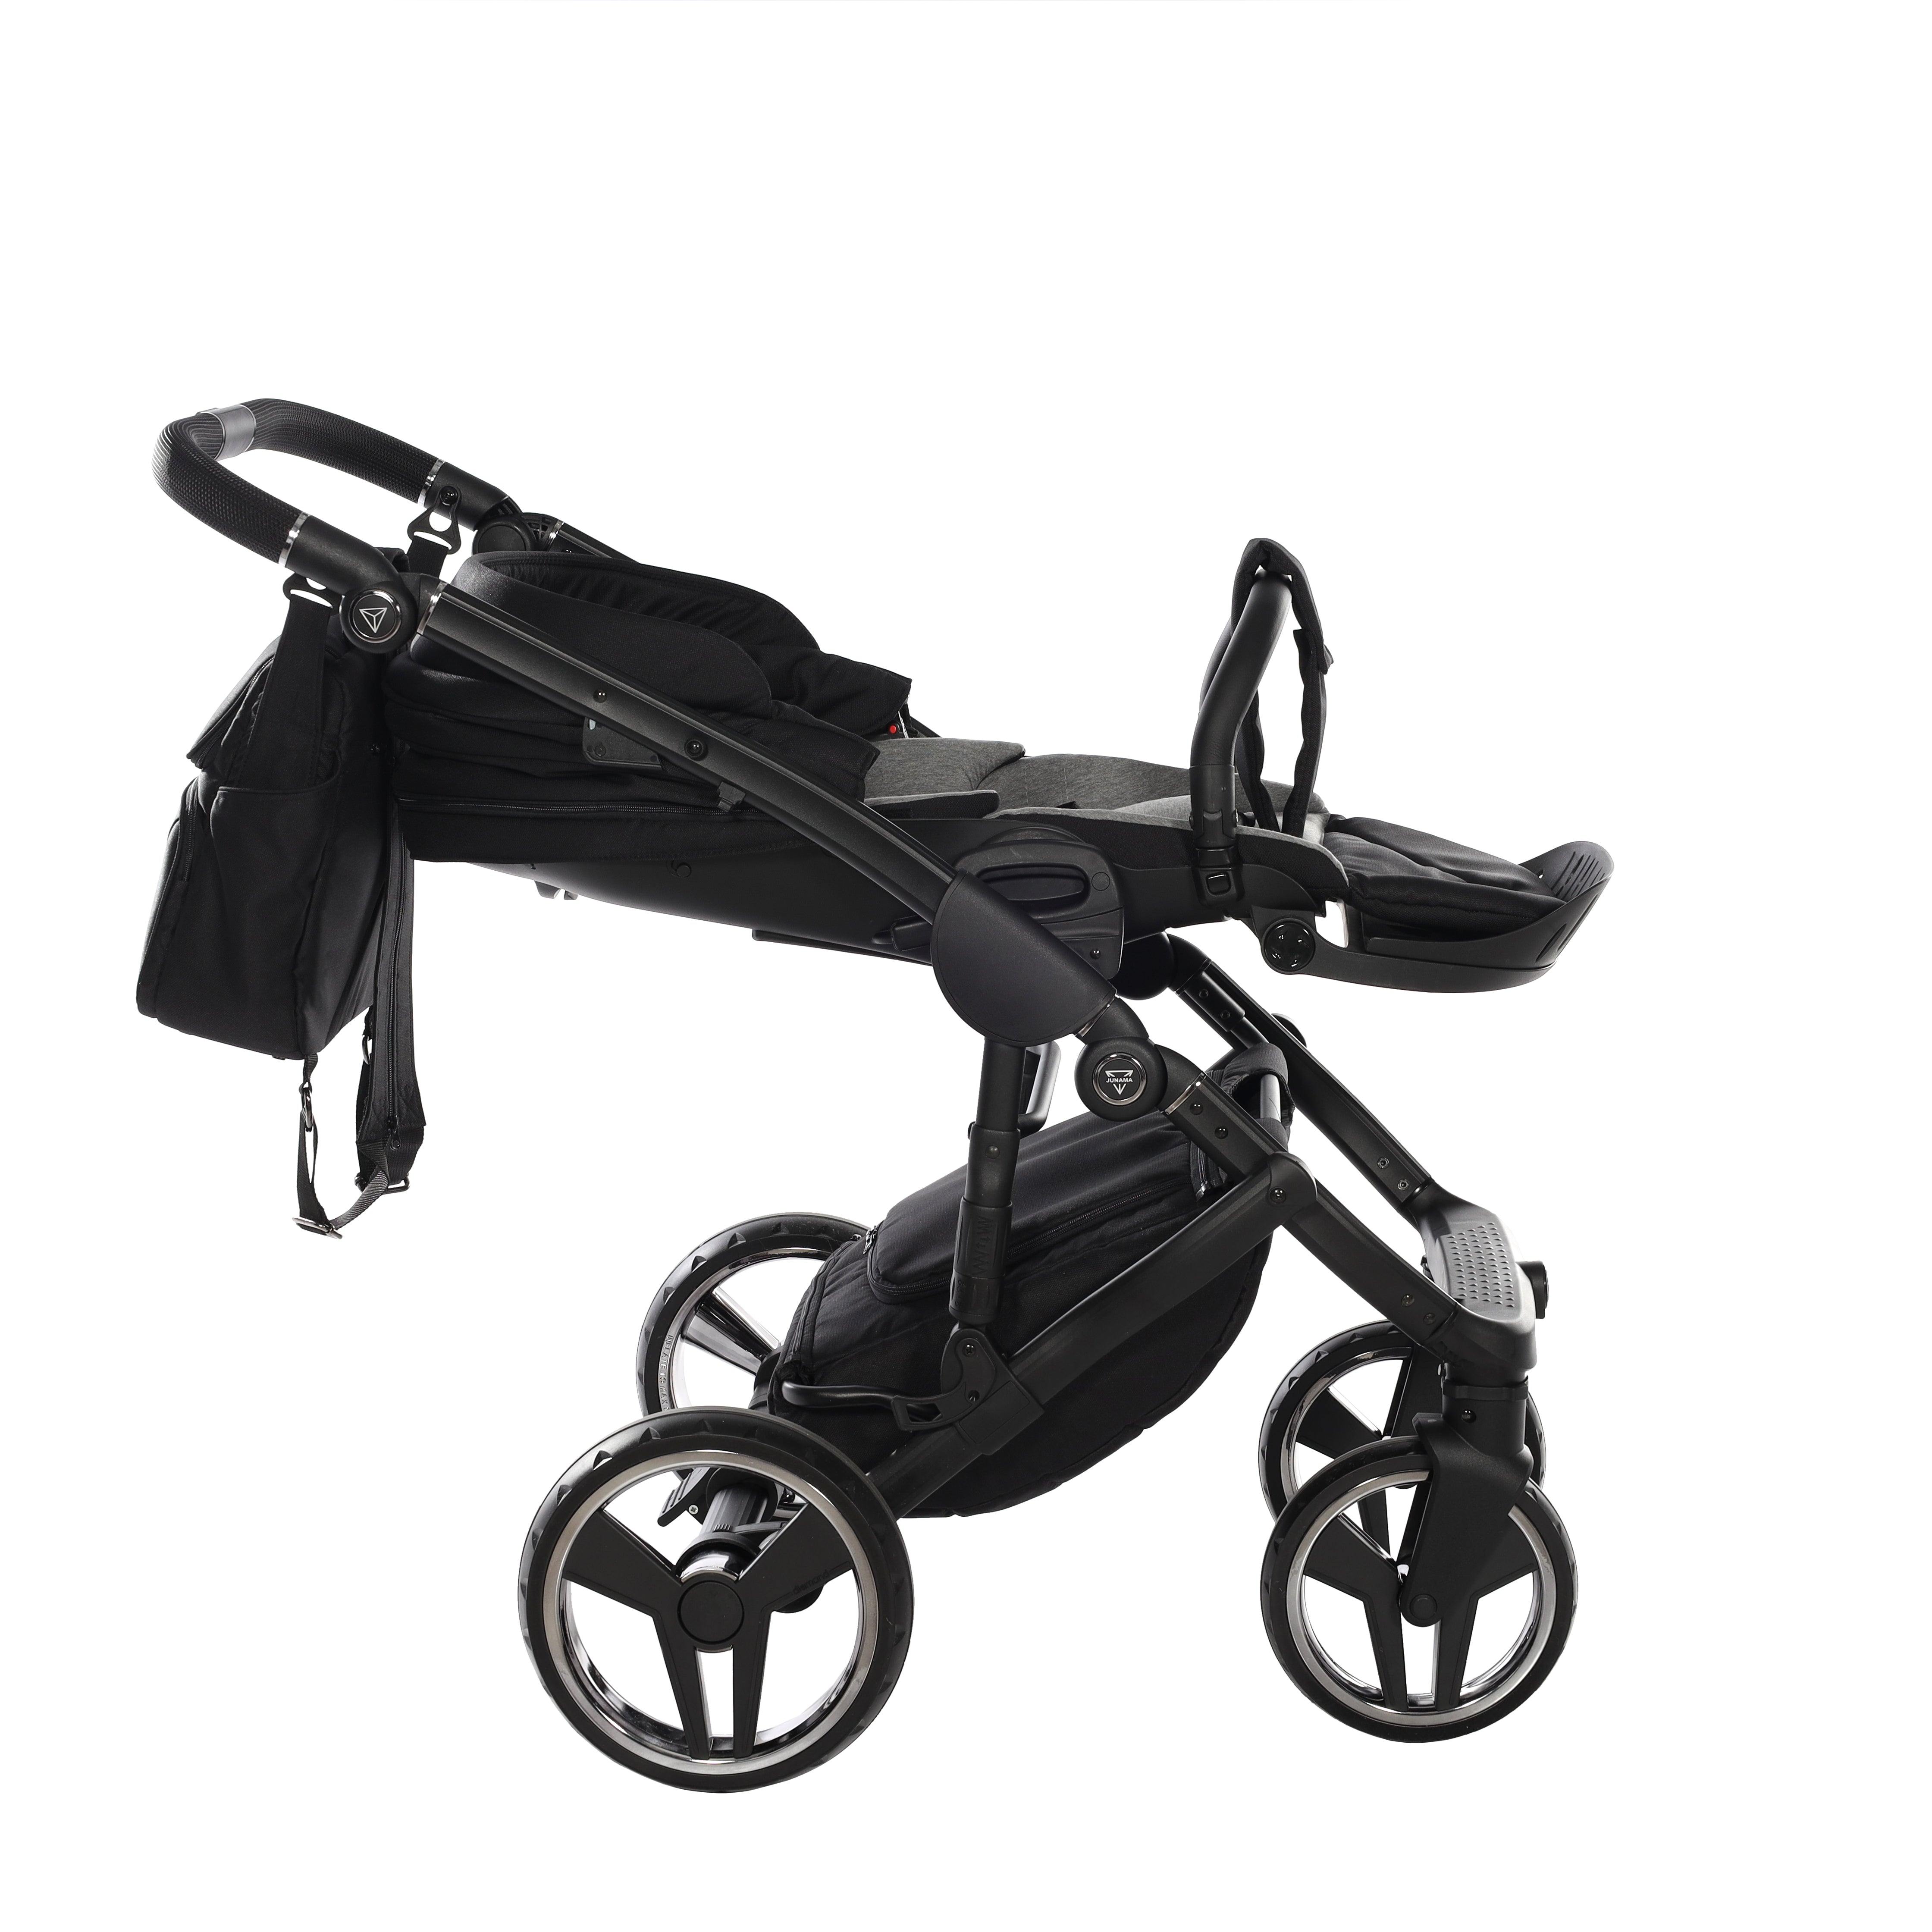 Junama BASIC, baby stroller and bassinet 2 in 1 - BLACK, Code number: JUNBSC01